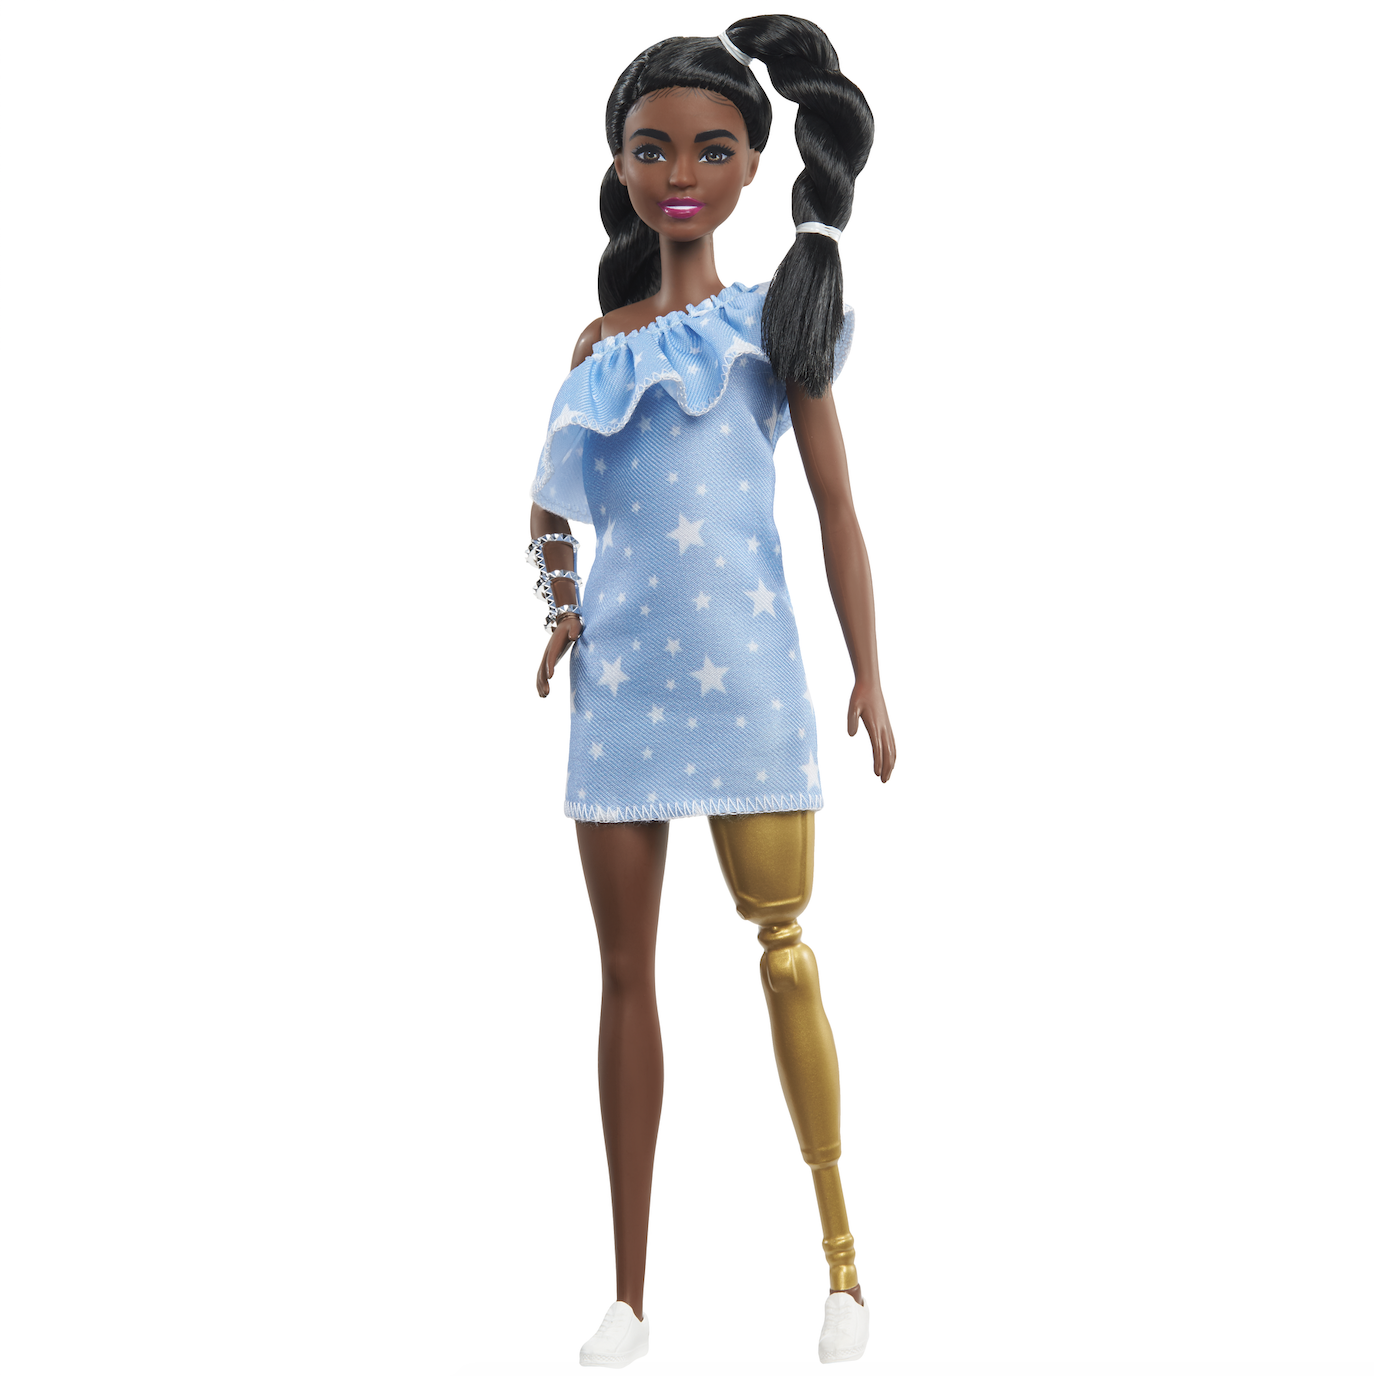 barbie with prosthetic limb